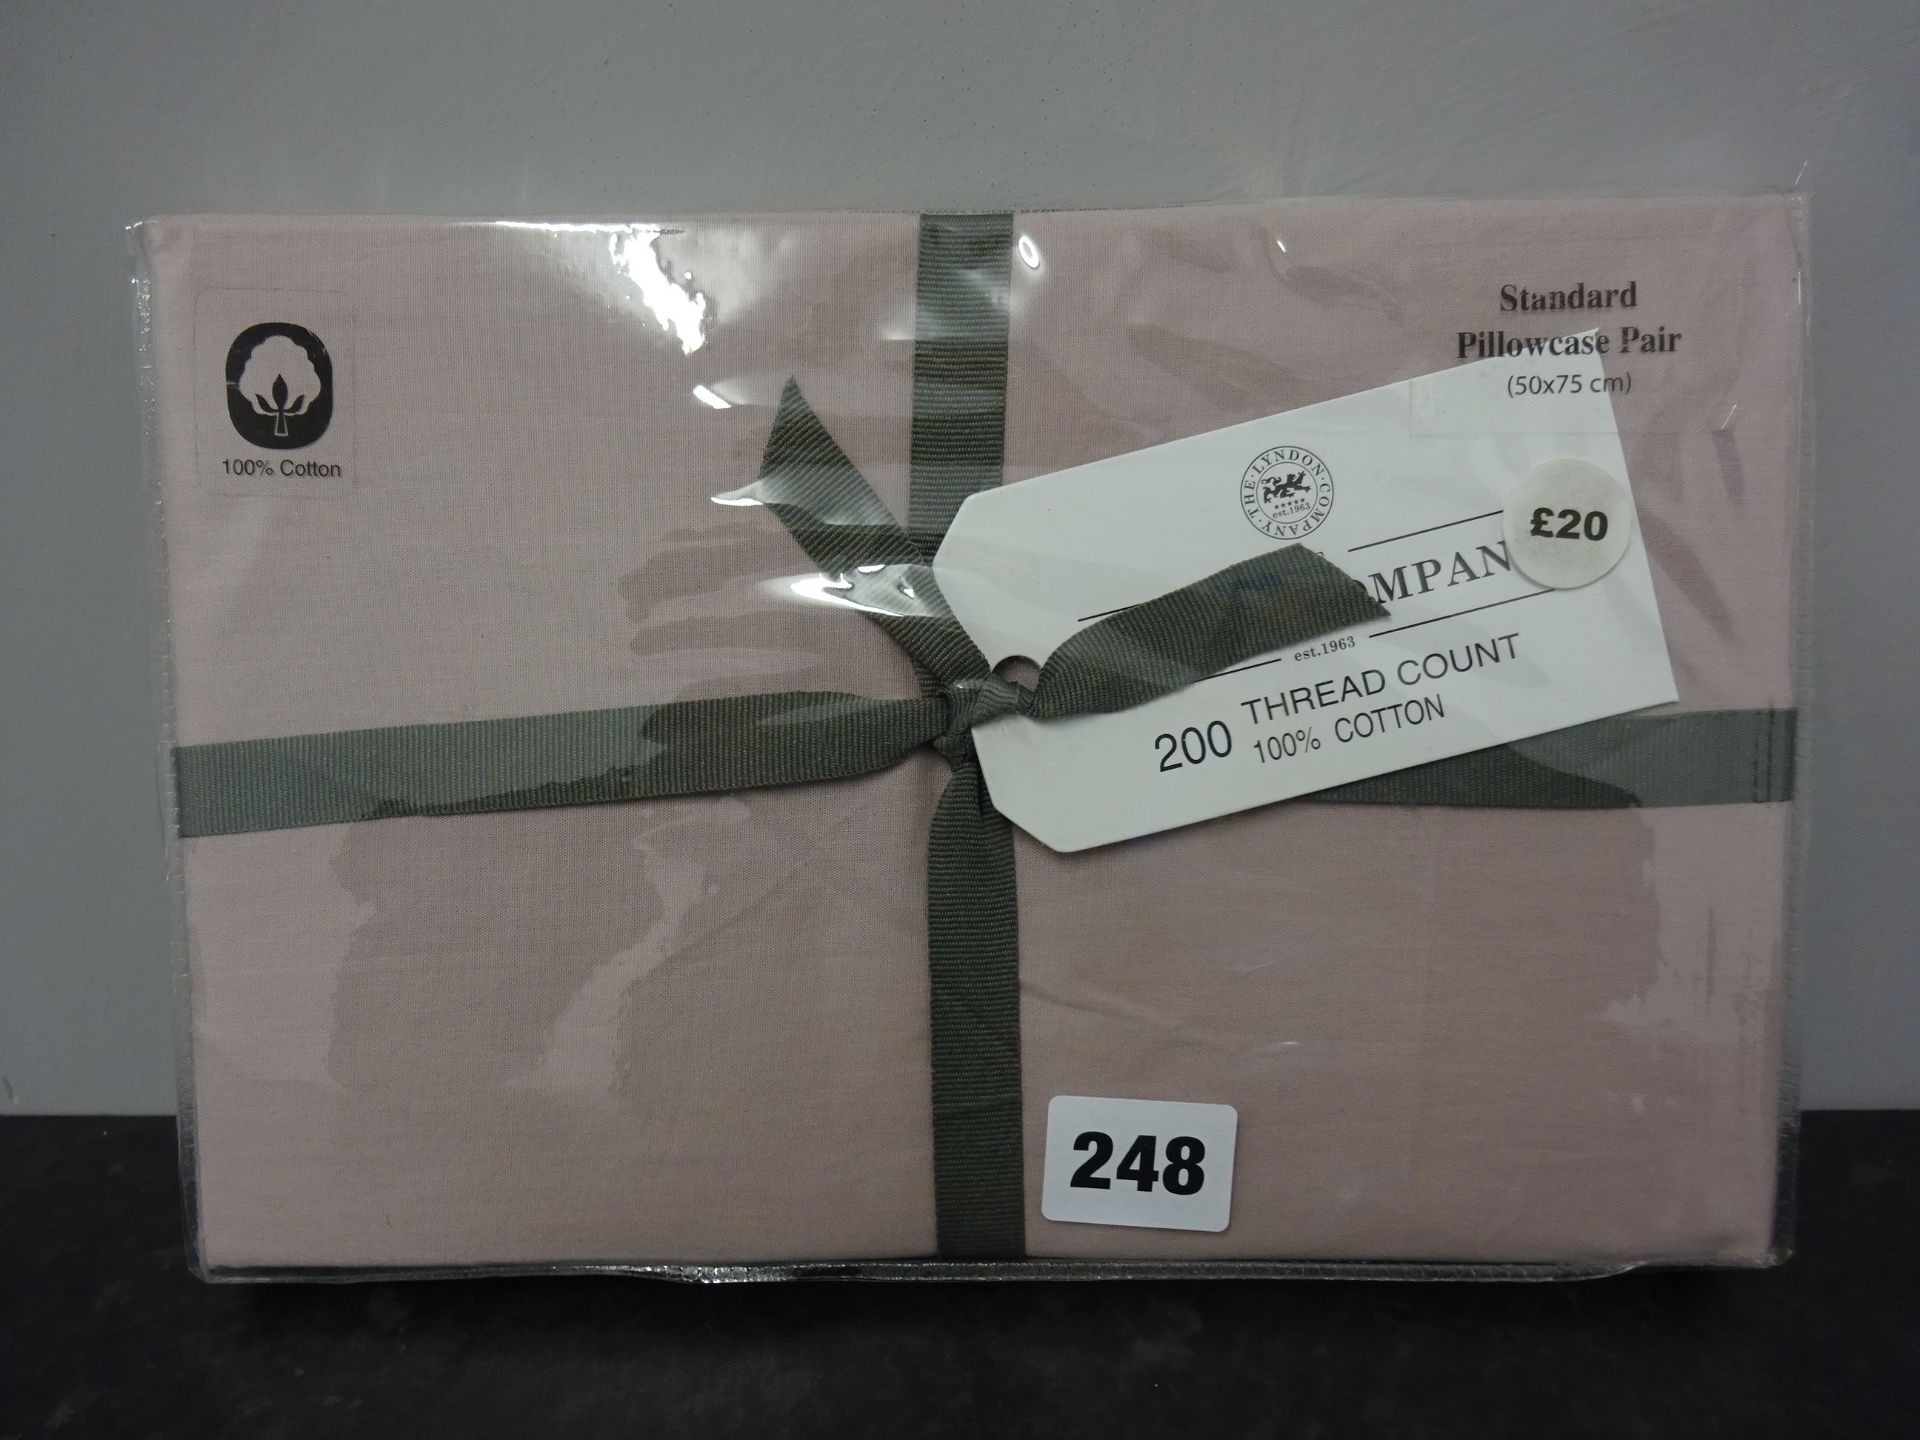 Pink Cotton Pillowcase Pair - RRP £20.